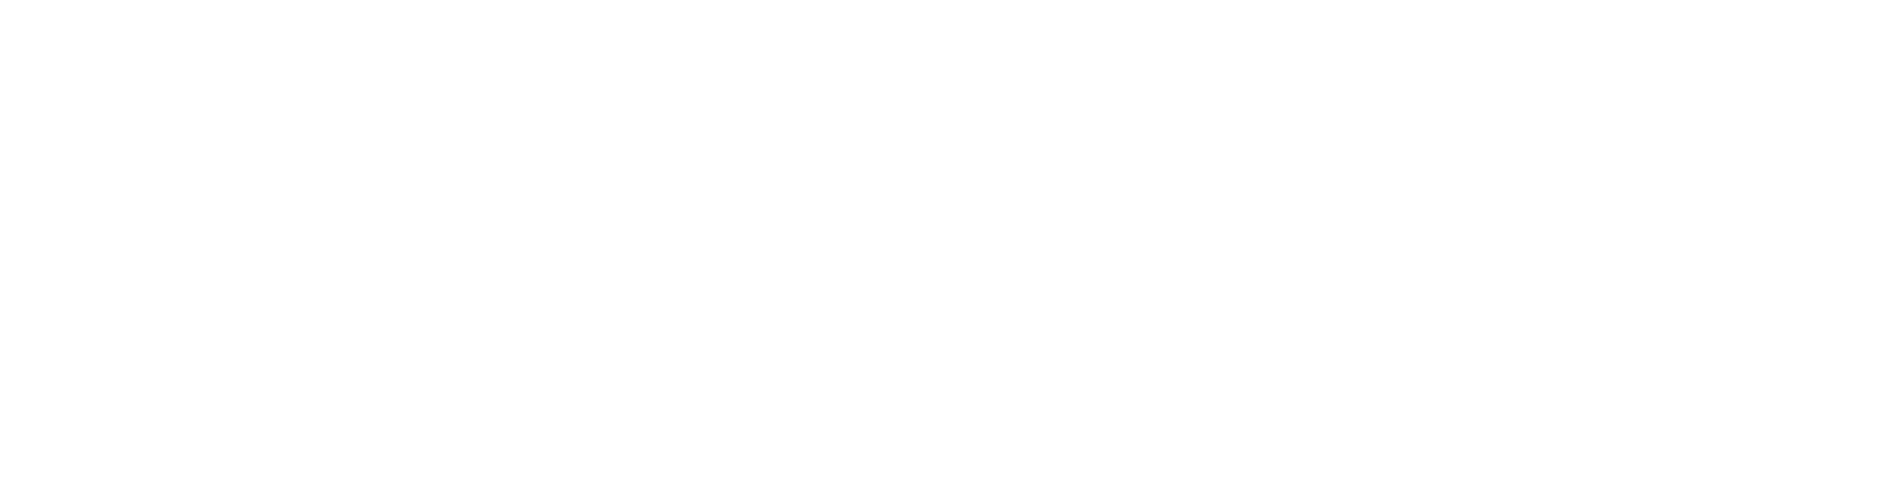 Algo Tech Strategy